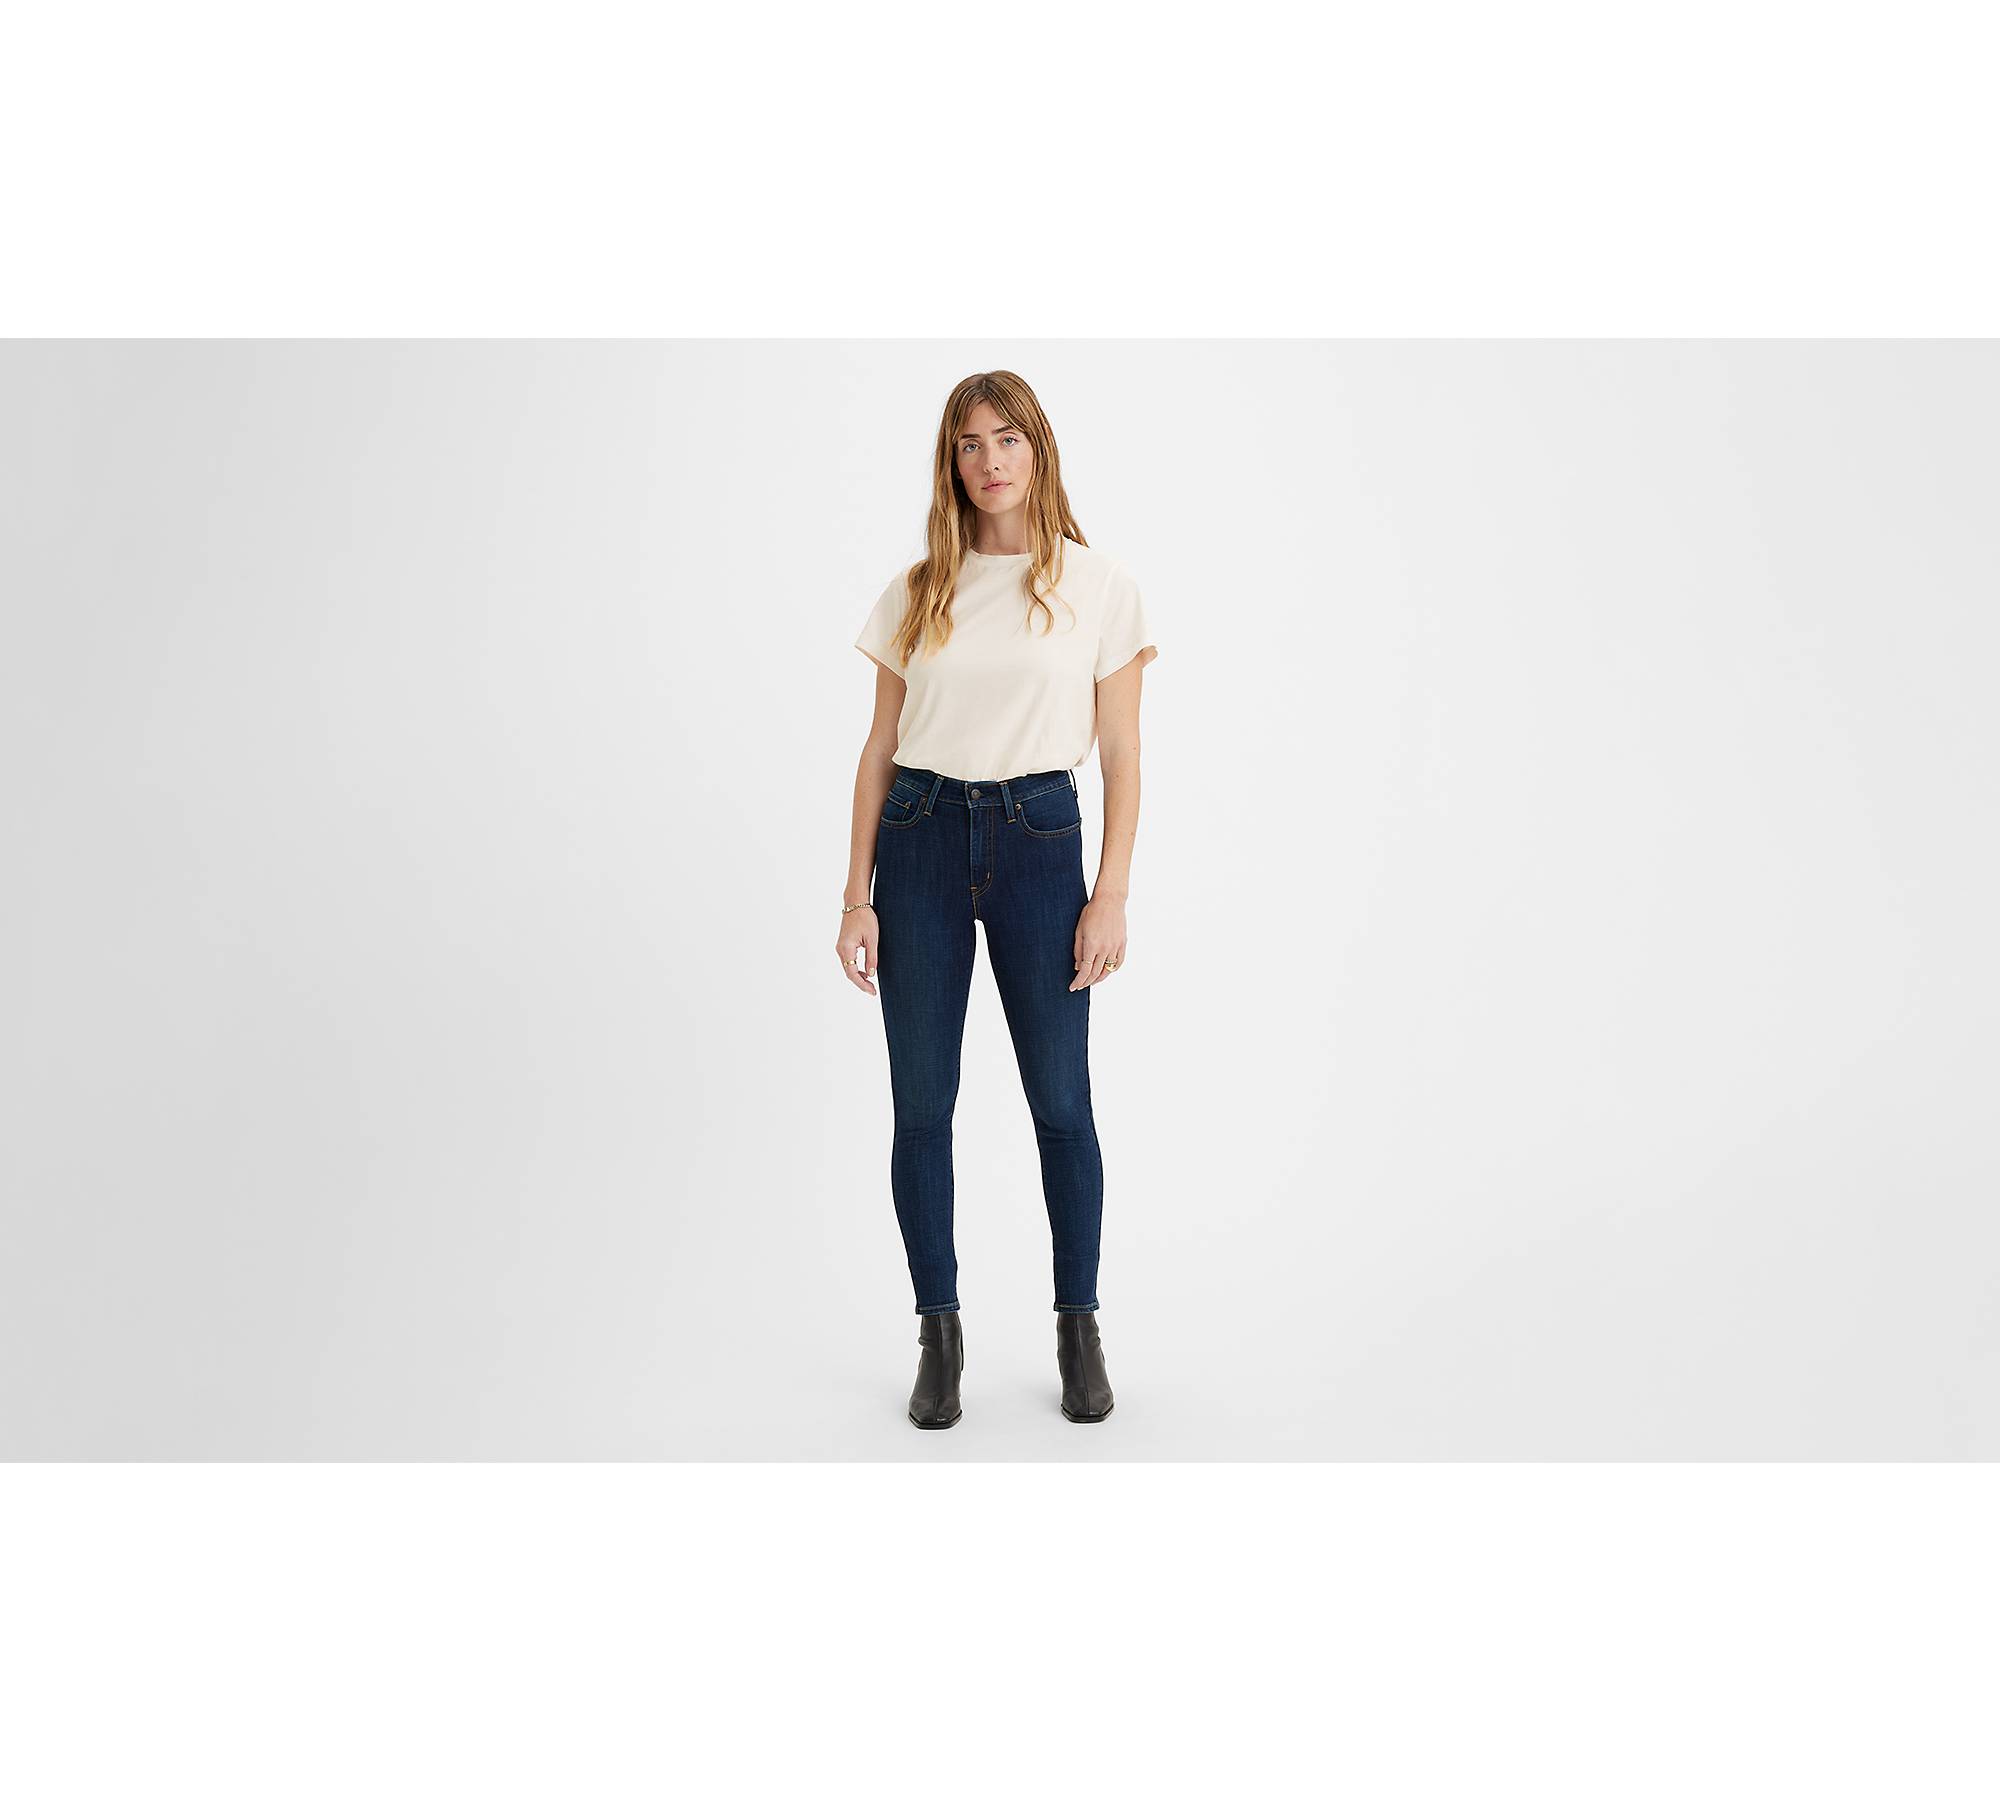 Levi's Women's 721 High-Rise Skinny Jeans - Blue Story